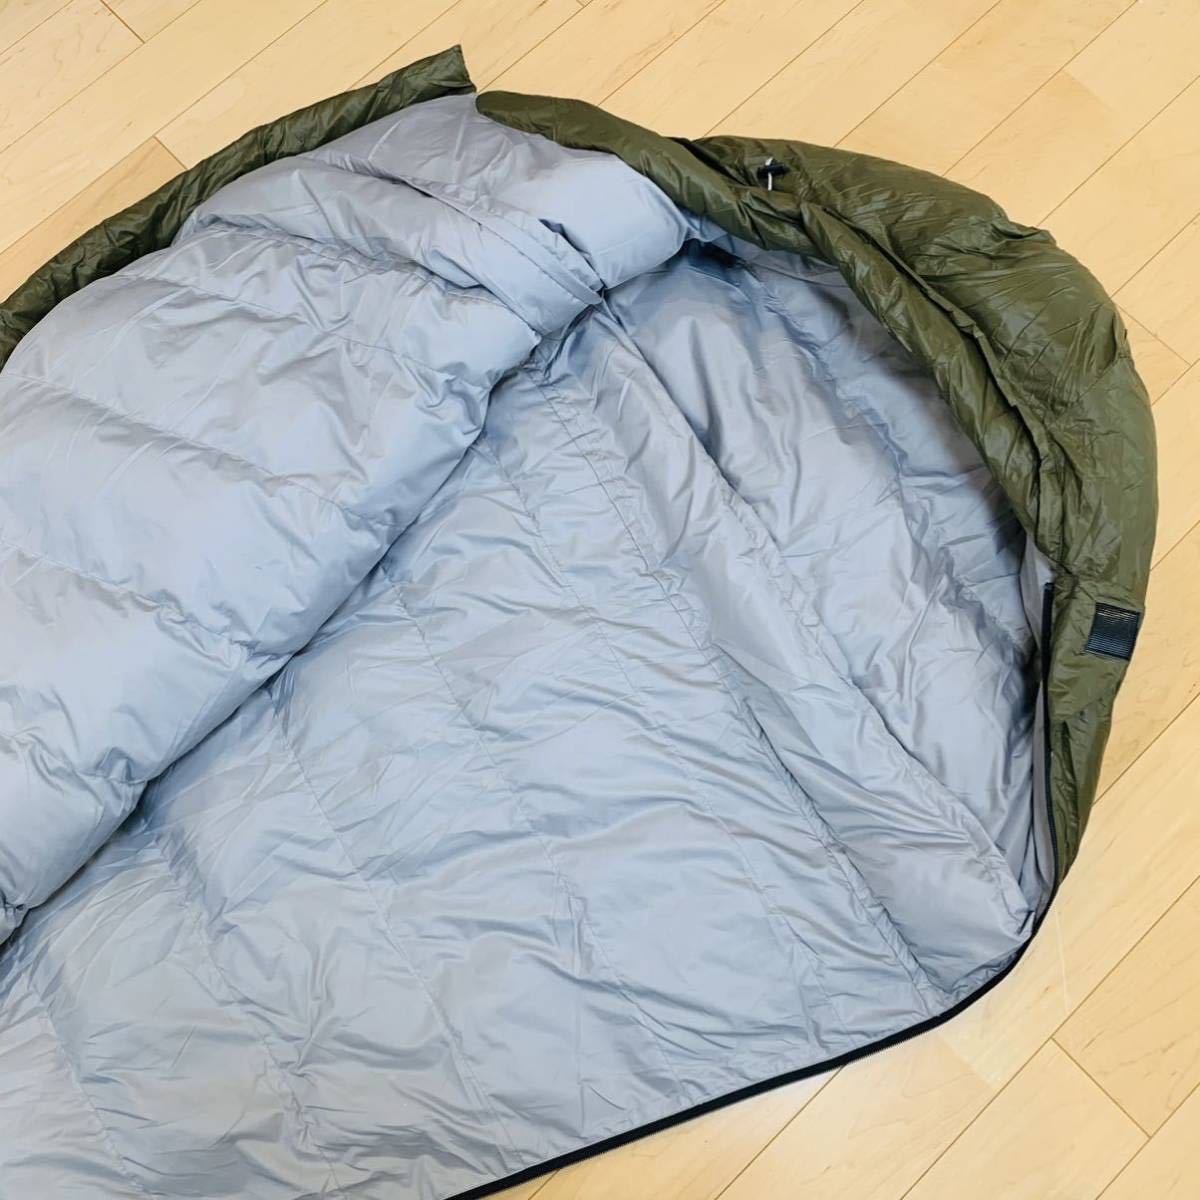 KAMPERBOX最高品質 極細1000gアヒルダウン マミー型寝袋 シュラフ厚暖撥水 最低-35℃ アウトドア キャンプ 野外登山 車中泊 205x88cm 1.6kg_画像6